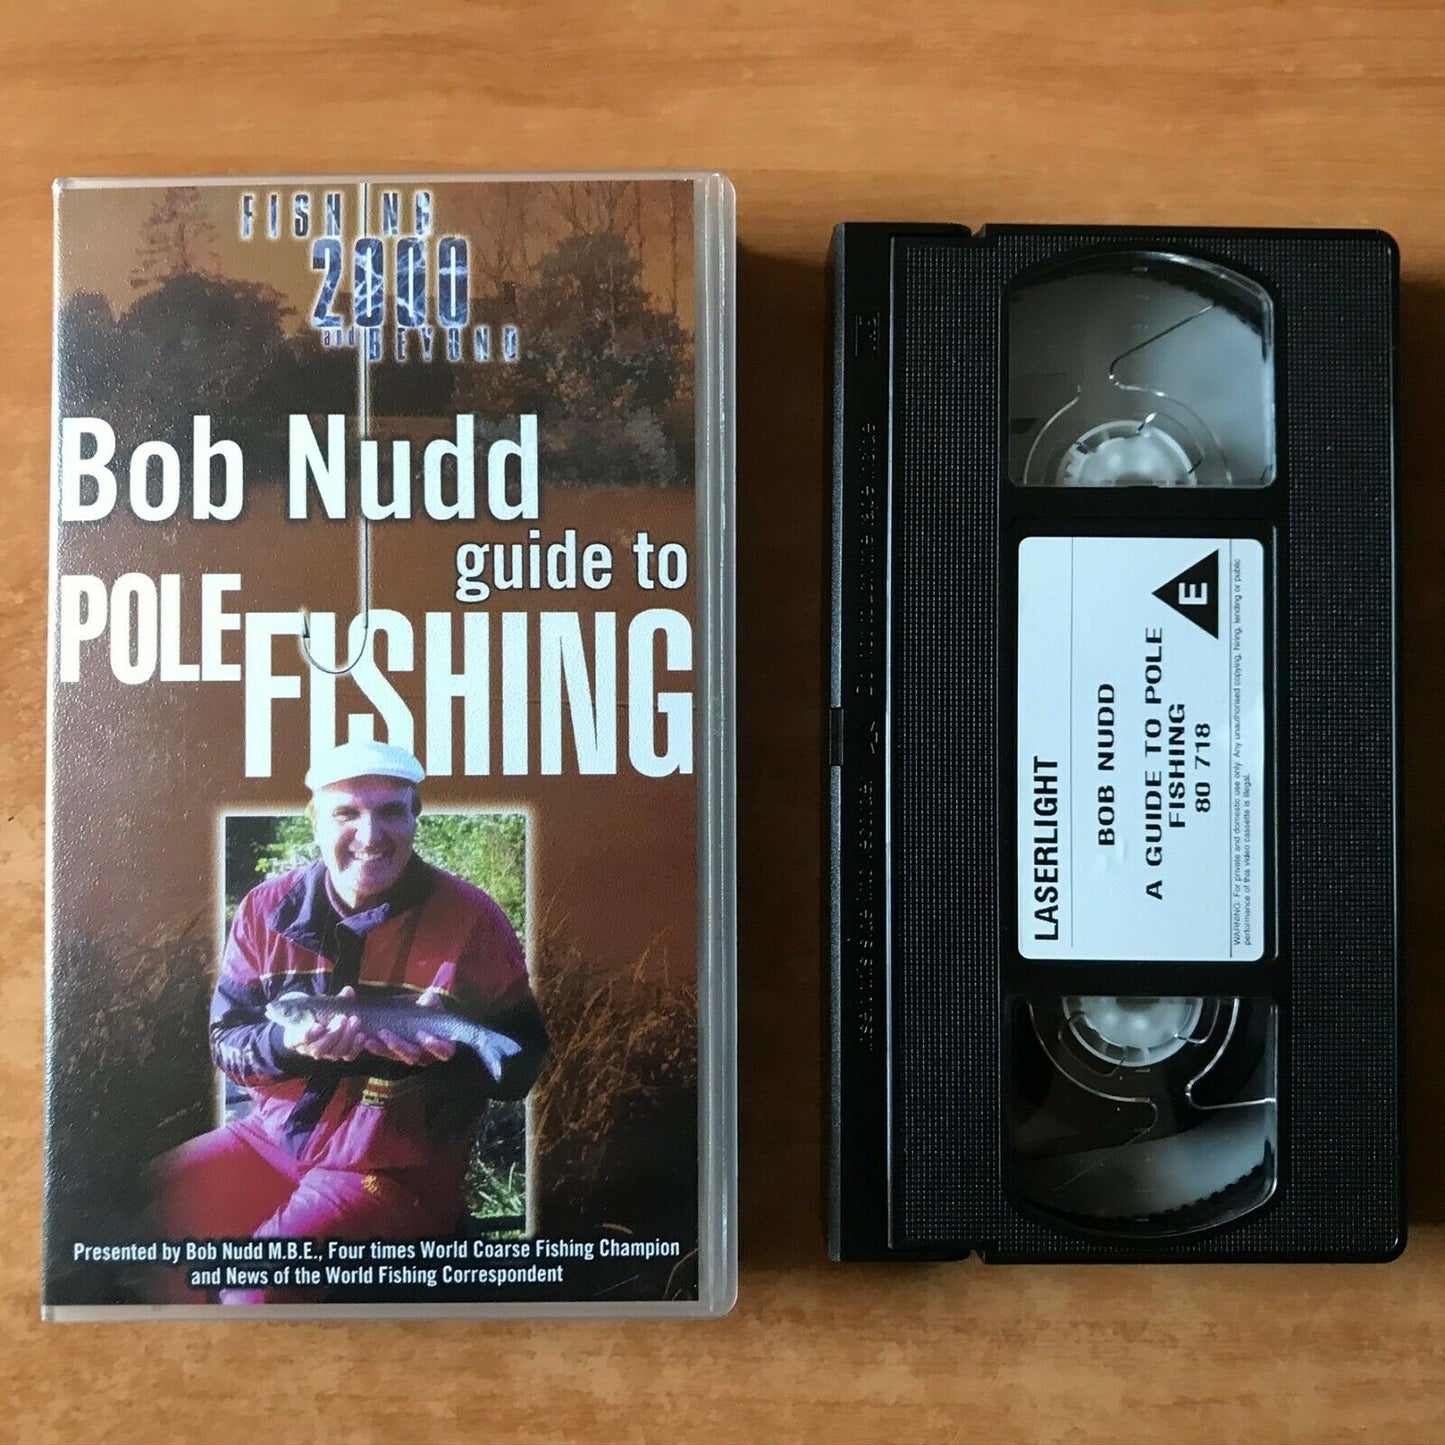 Pole Fishing; [Bob Nudd] Guide - Barford Lakes / Norwich - Sports - Pal VHS-